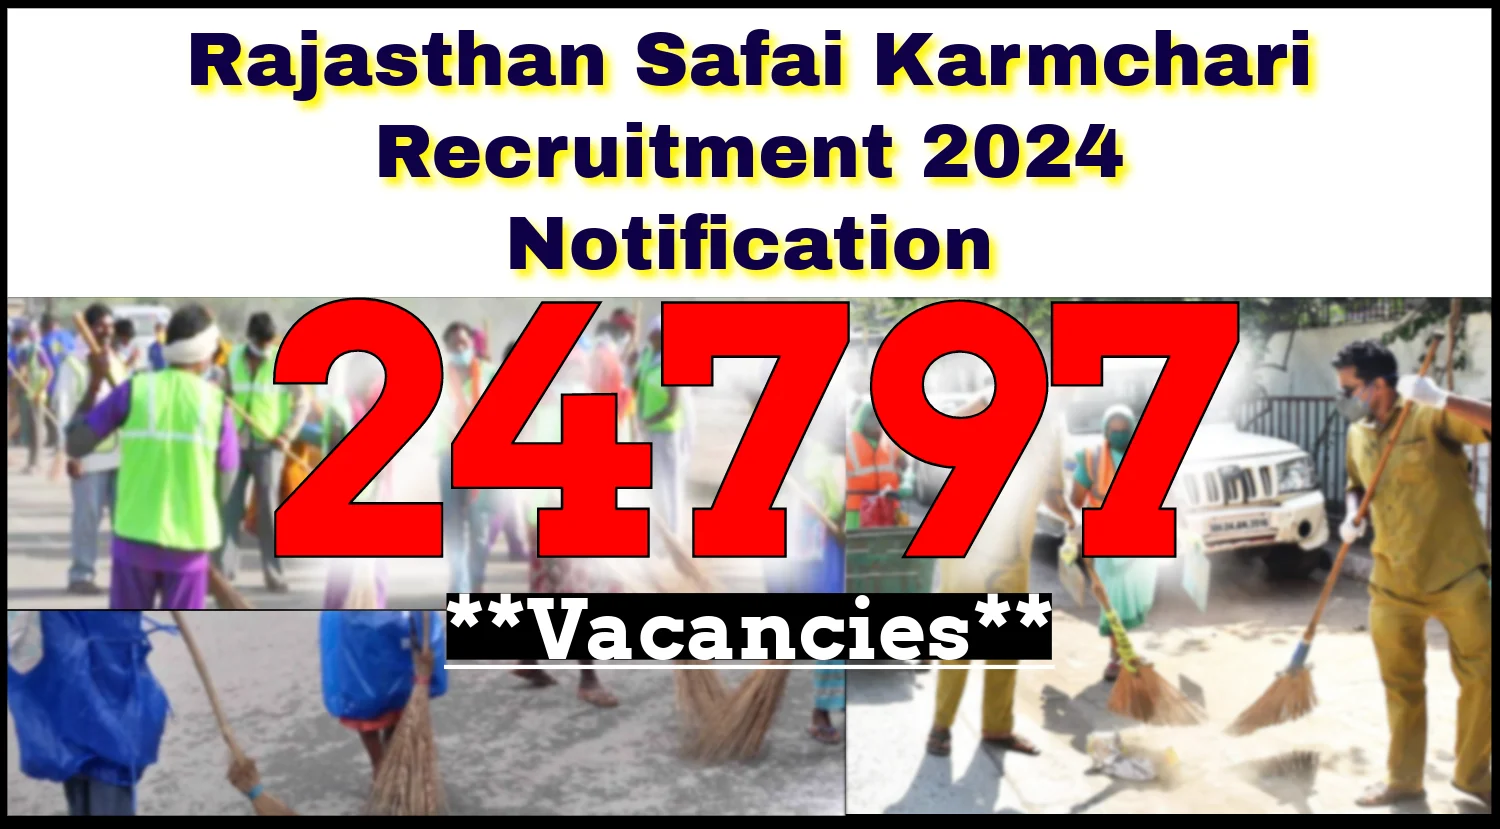 Rajasthan Safai Karmchari Recruitment 2024 Notification for 24797 Vacancies Out